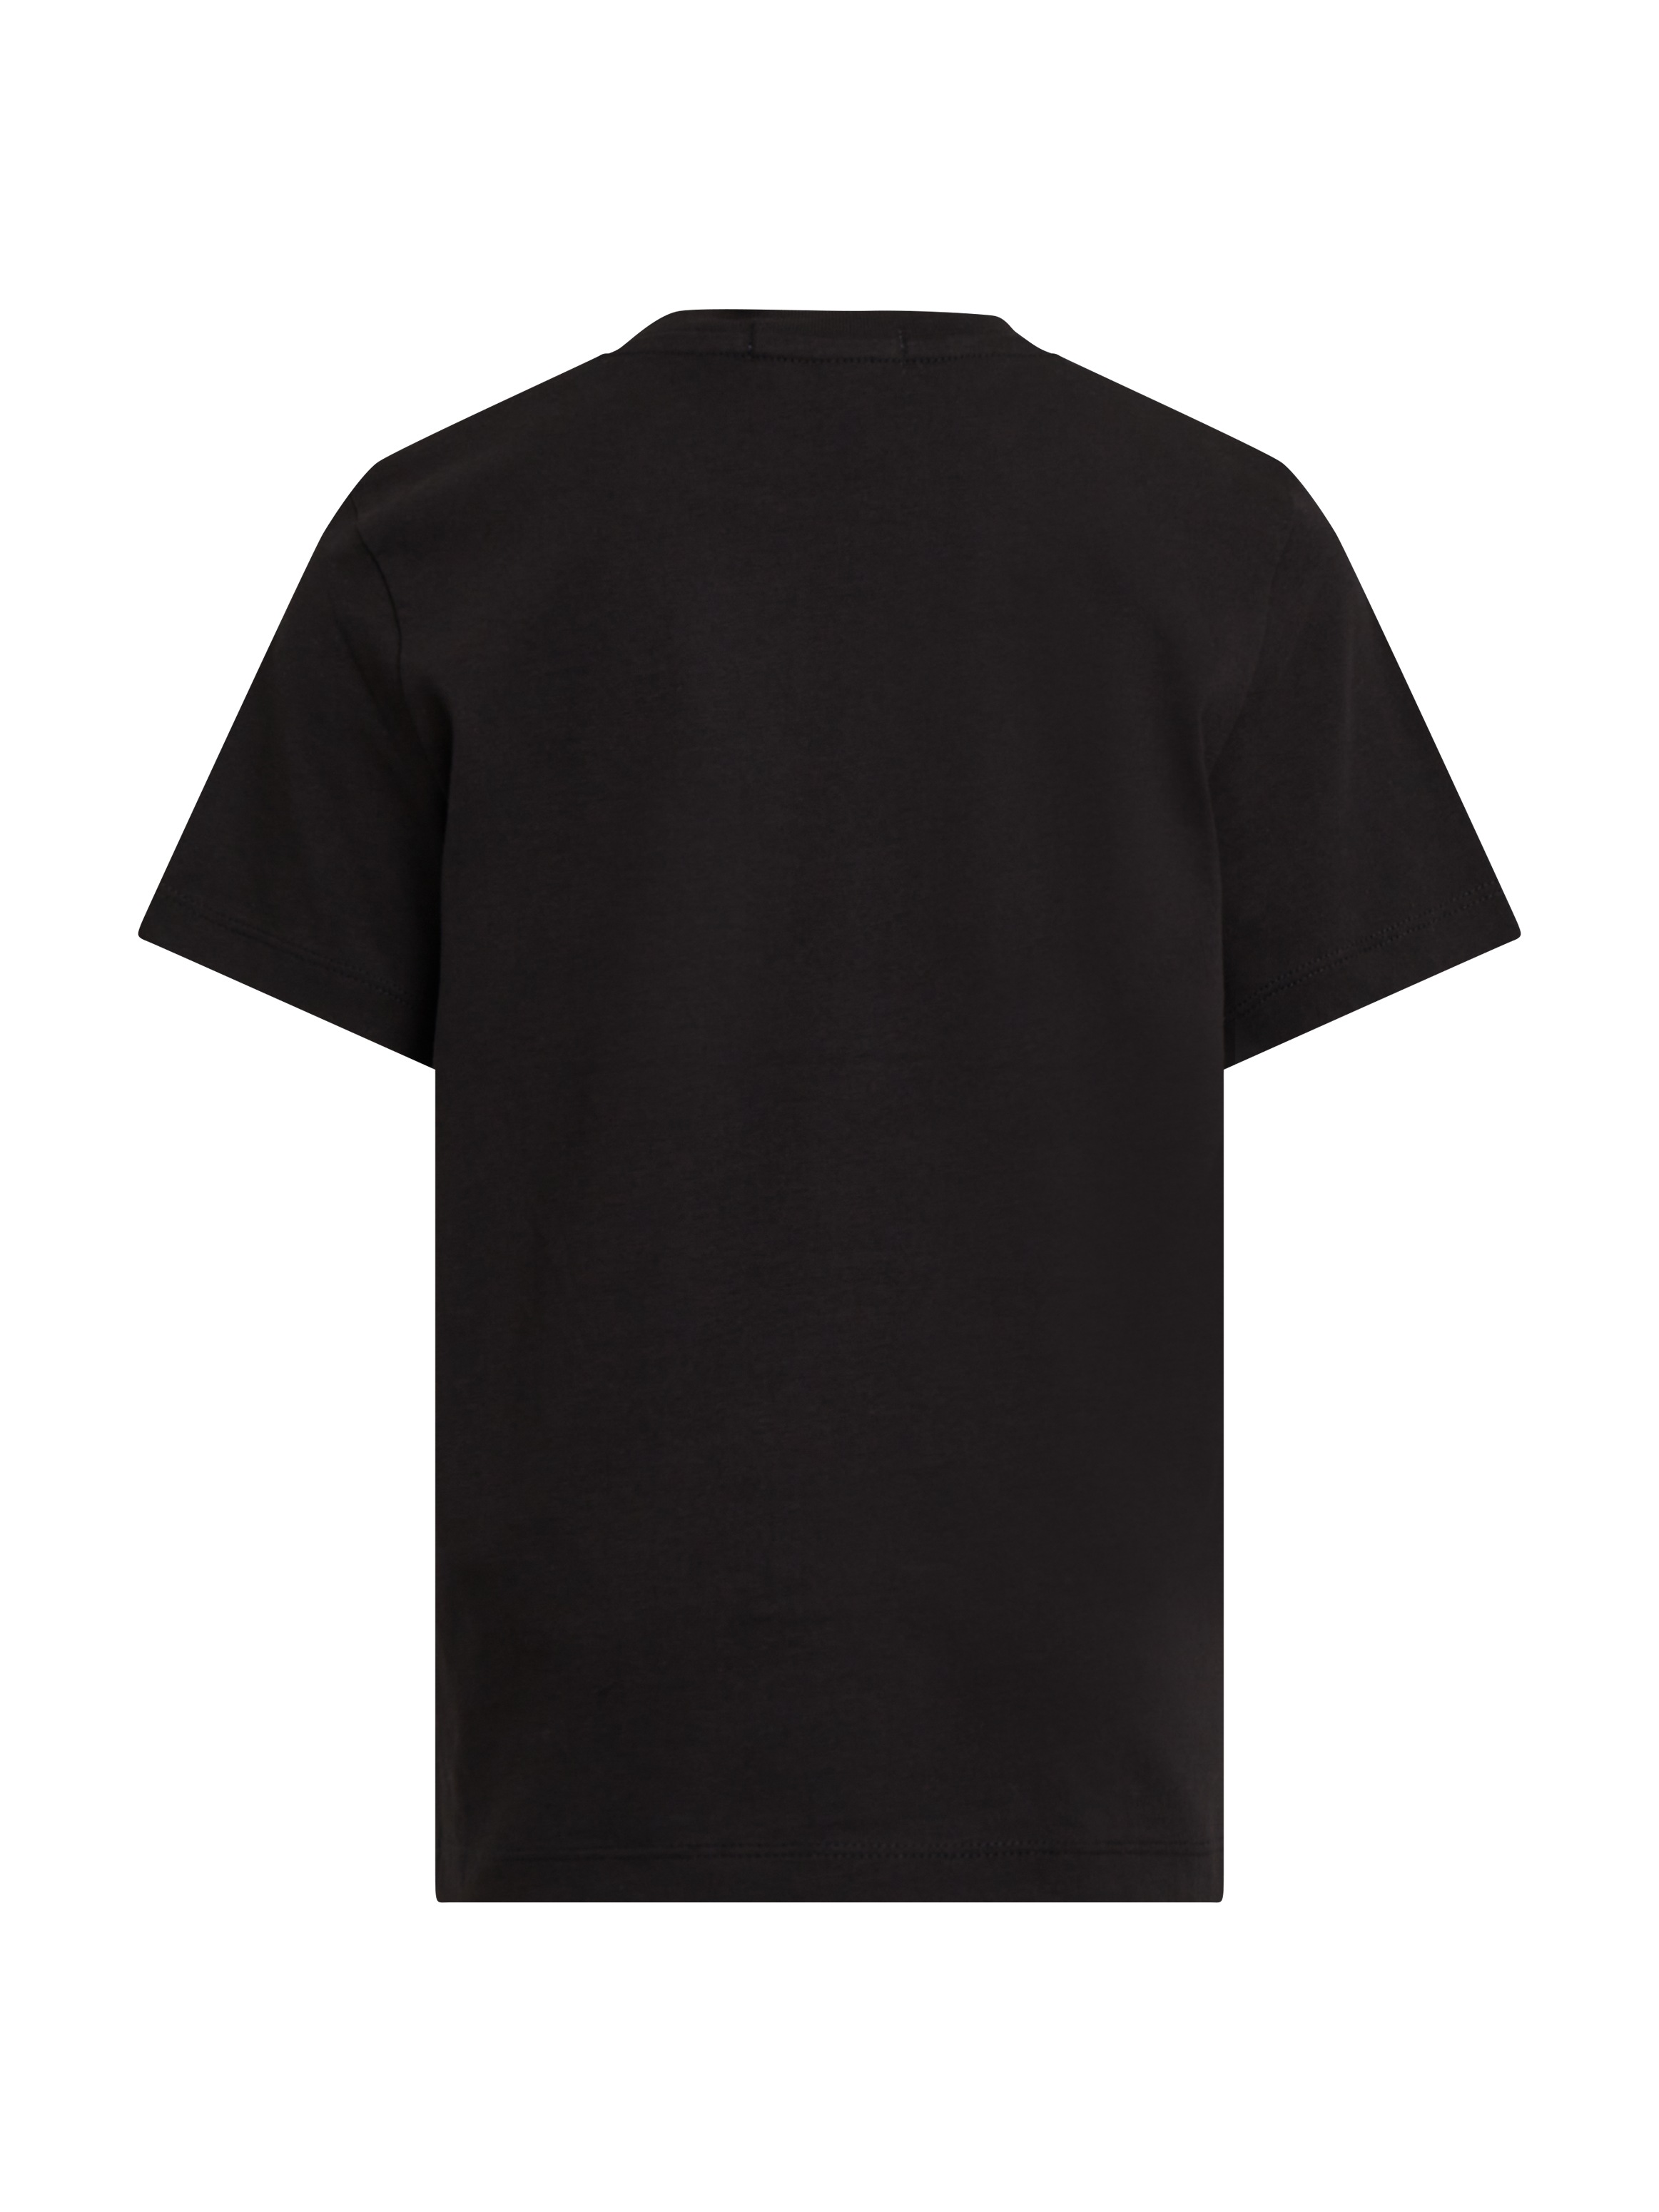 mit T-SHIRT«, Jeans online Calvin Klein LOGO Logodruck T-Shirt shoppen SS »CHEST INST.